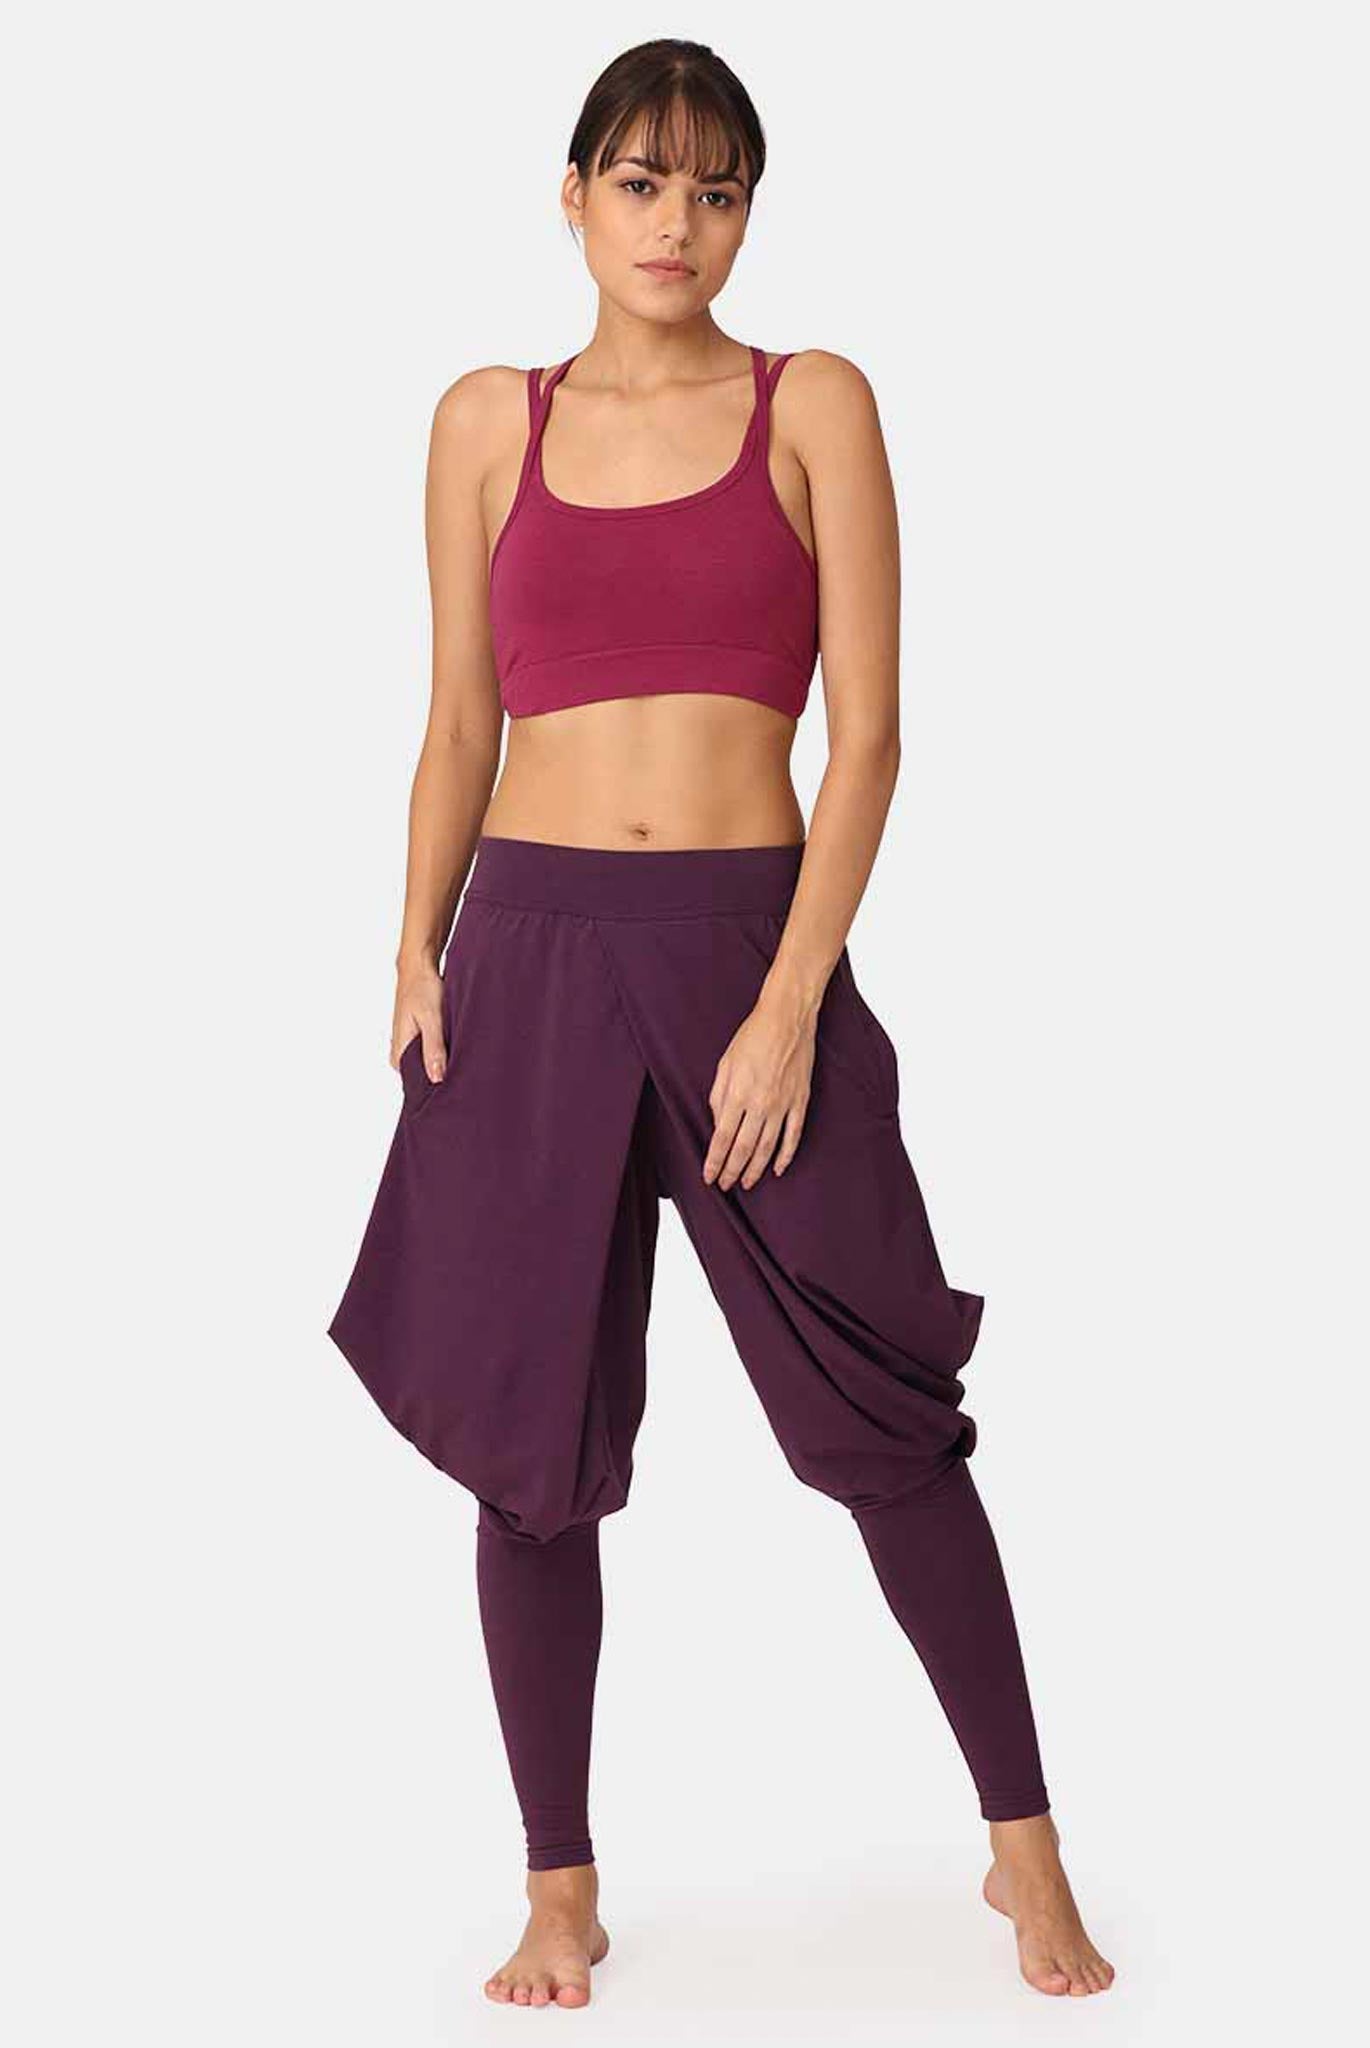 Gubotare Yoga Pants For Women With Pockets Women's Boho Pants